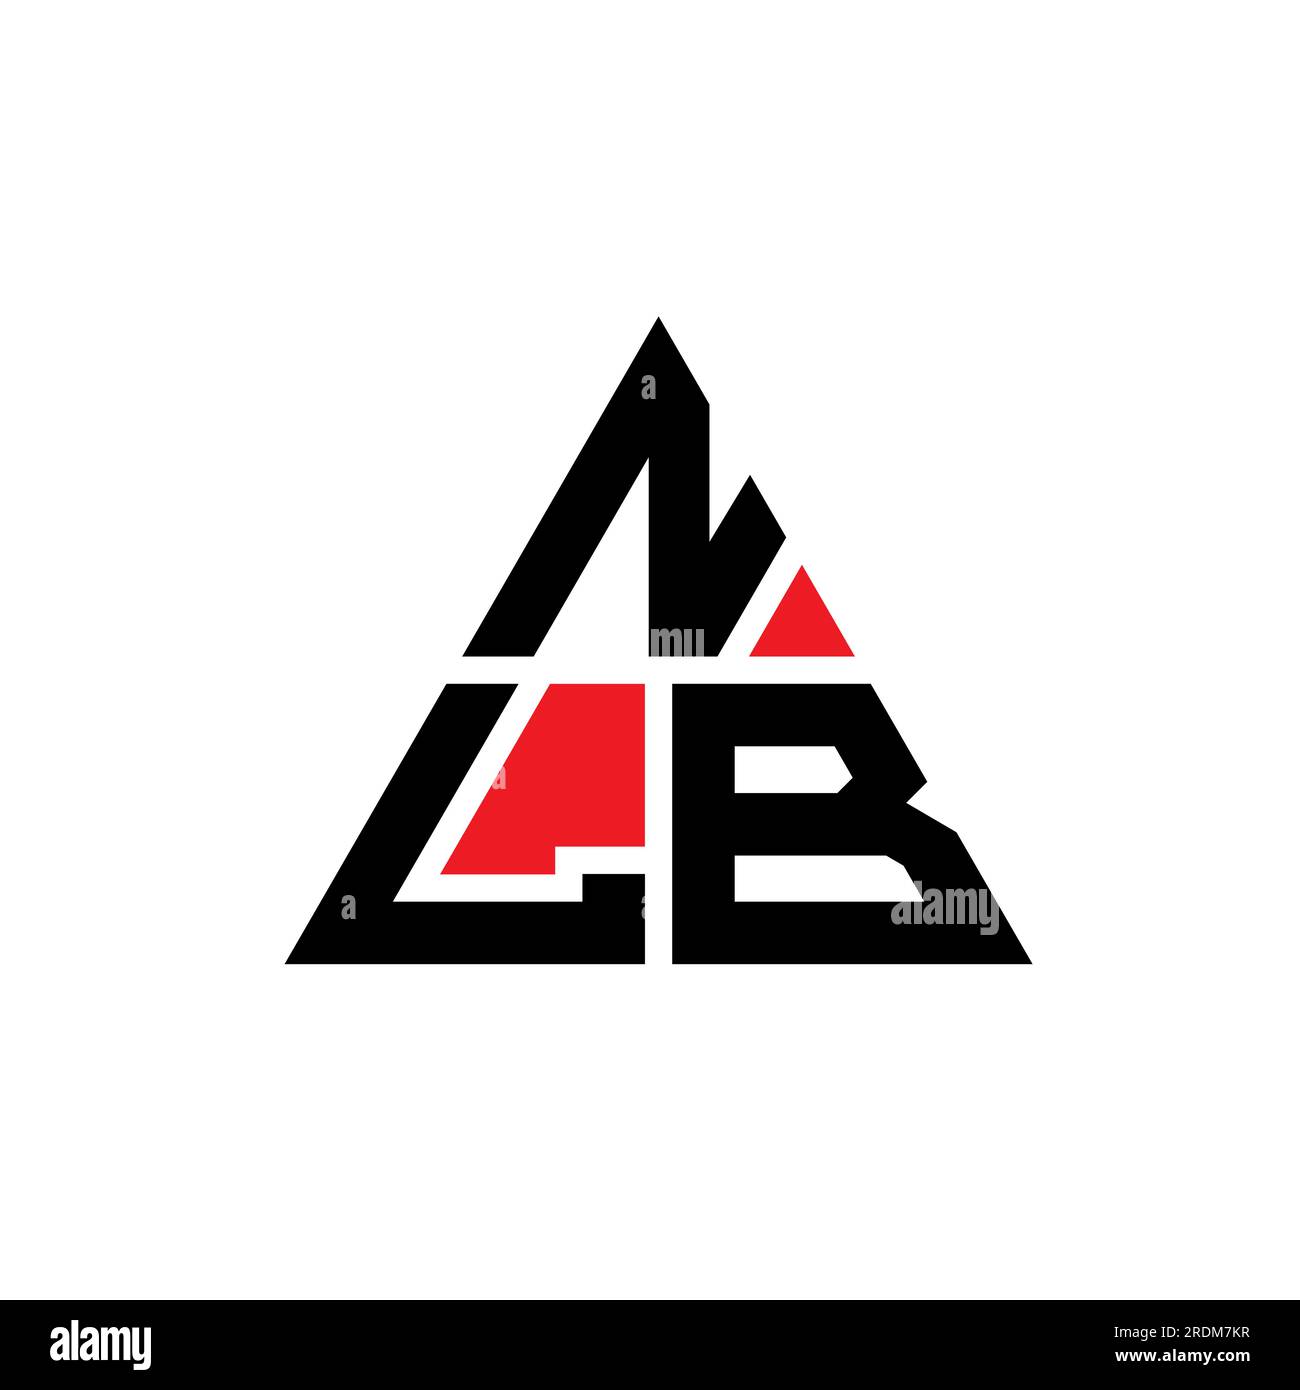 NLB triangle letter logo design with triangle shape. NLB triangle